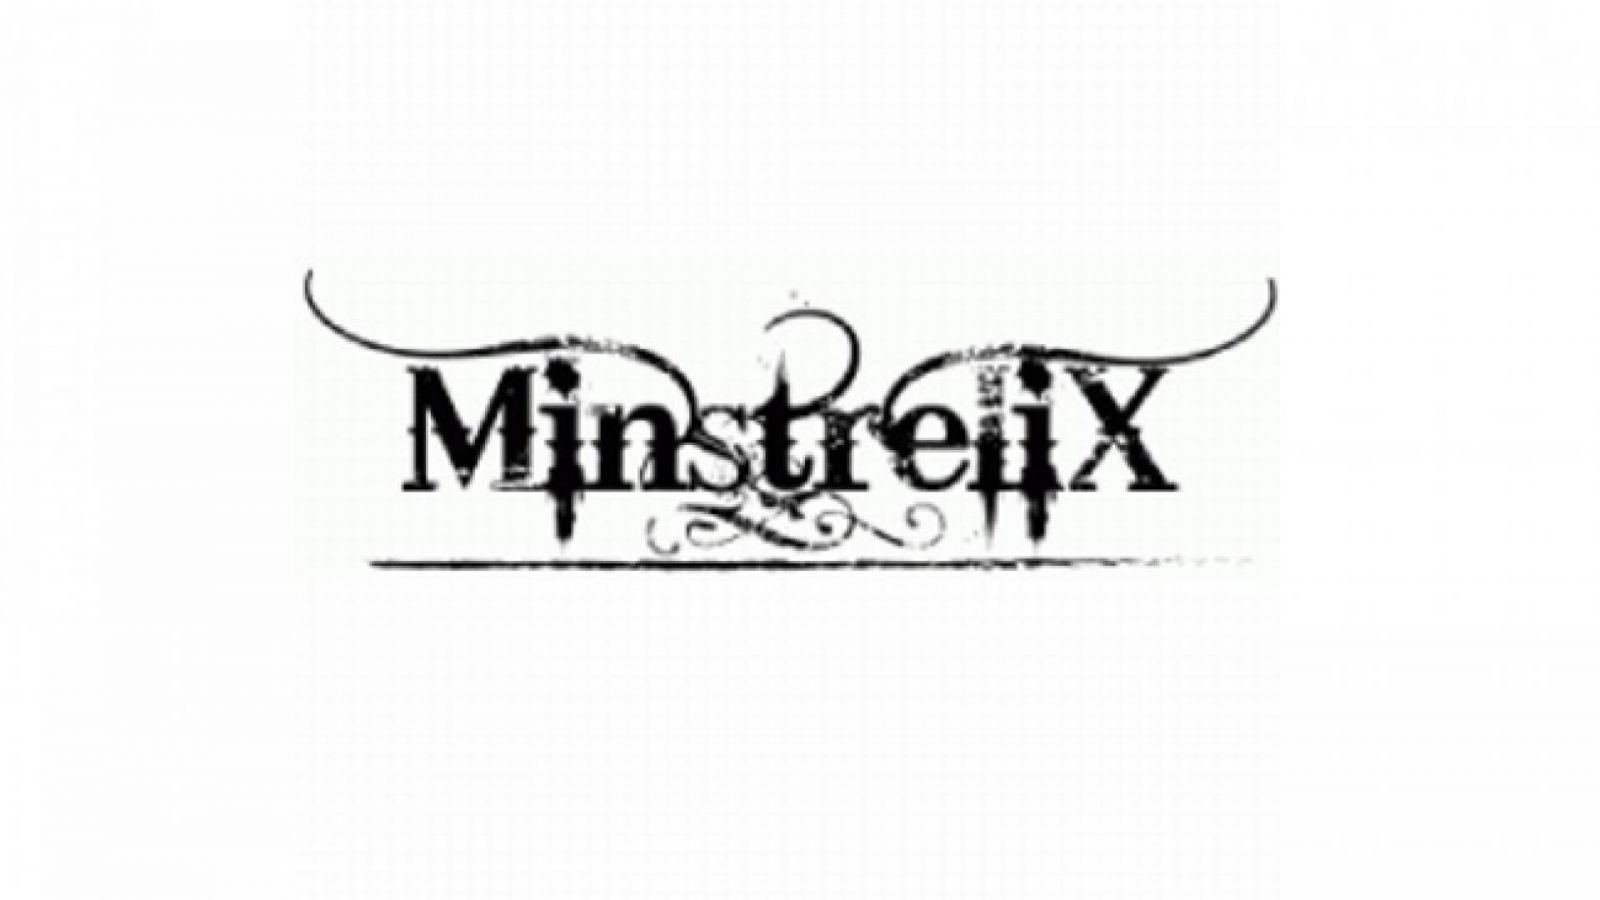 MinstreliX anuncia novo álbum © MinstreliX. All rights reserved.